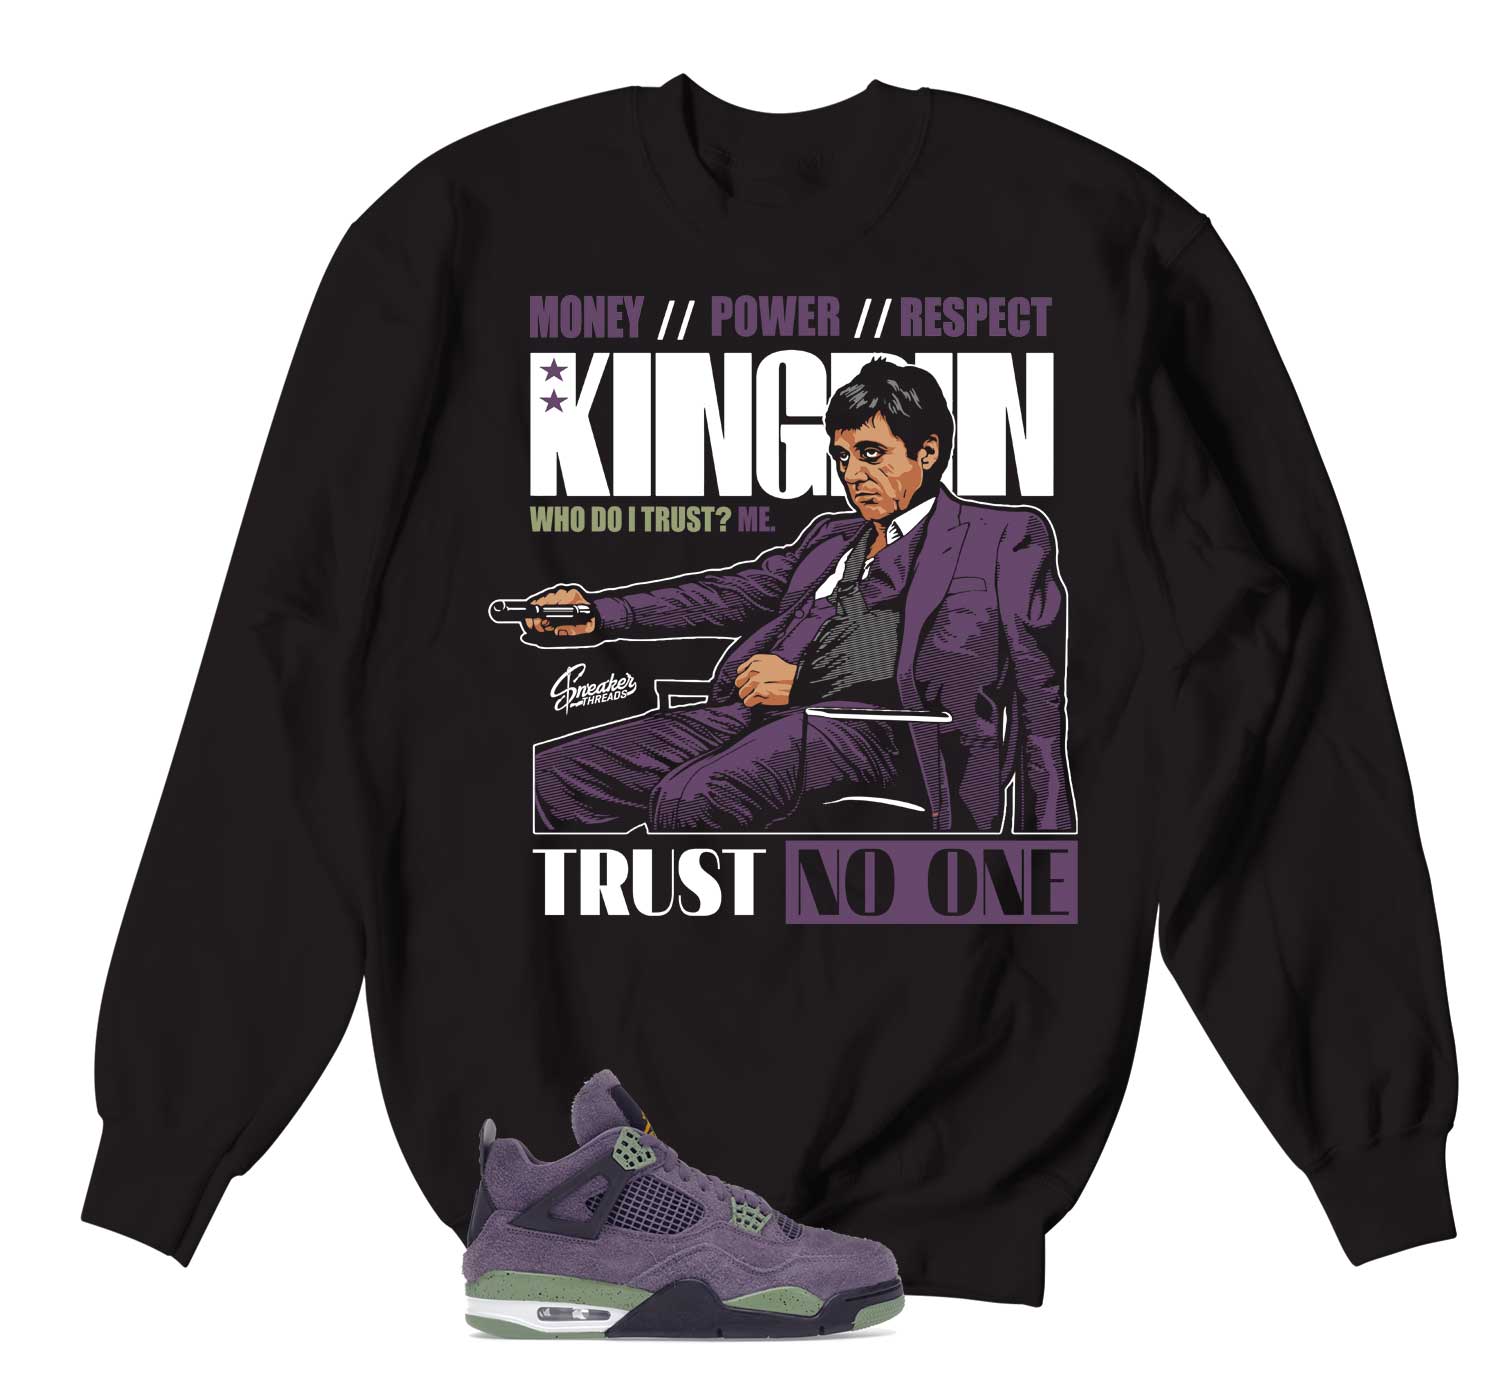 Retro 4 Canyon Purple Sweater - Trust Issues - Black